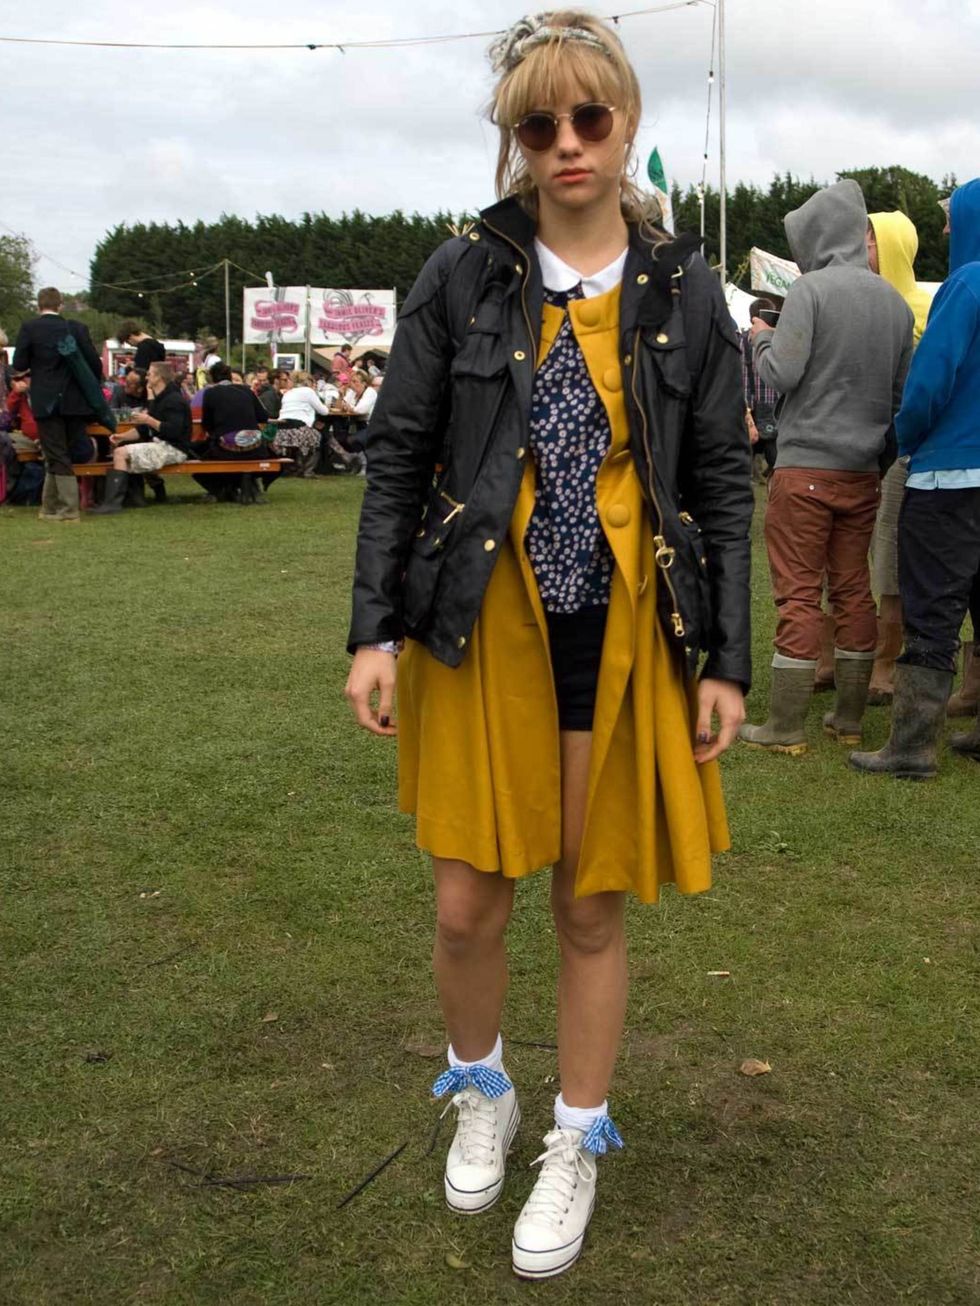 <p>Suki Waterhouse, 20, Model. Barbour jacket, Orla Kiely coat, Maje top, Vintage shorts, Converse shoes, Ray Ban sunglasses.</p><p>Photo by Tim Knowles</p>